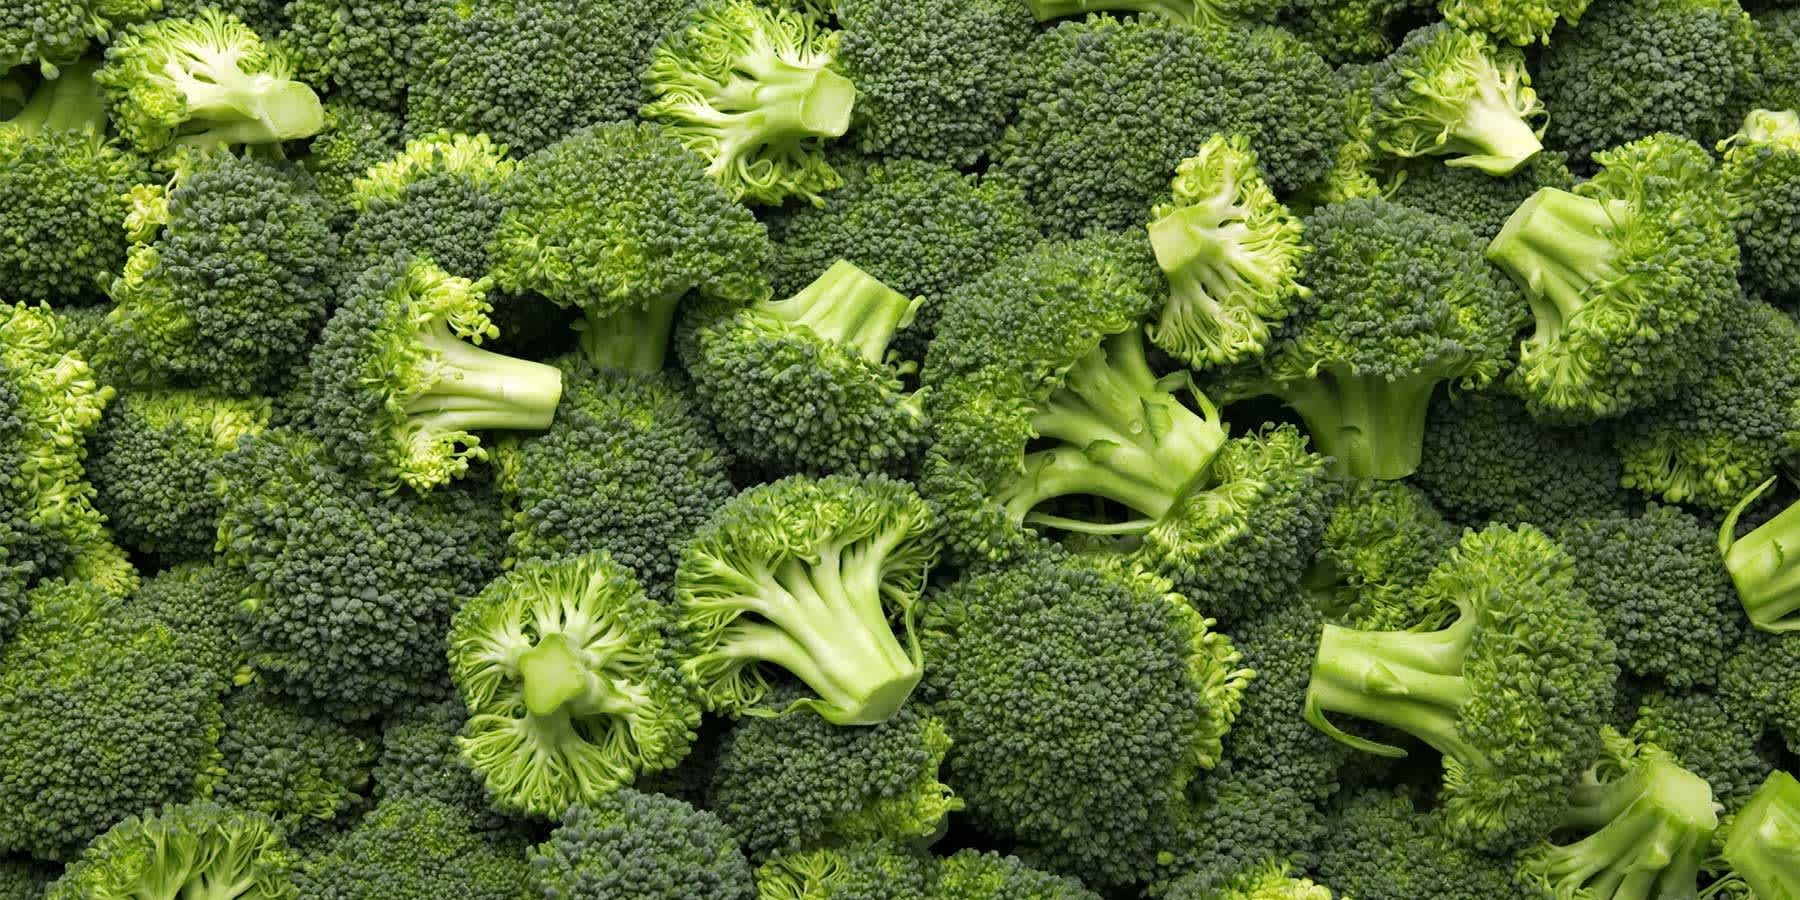 Pile of broccoli as example of veggies in metabolic reset diet